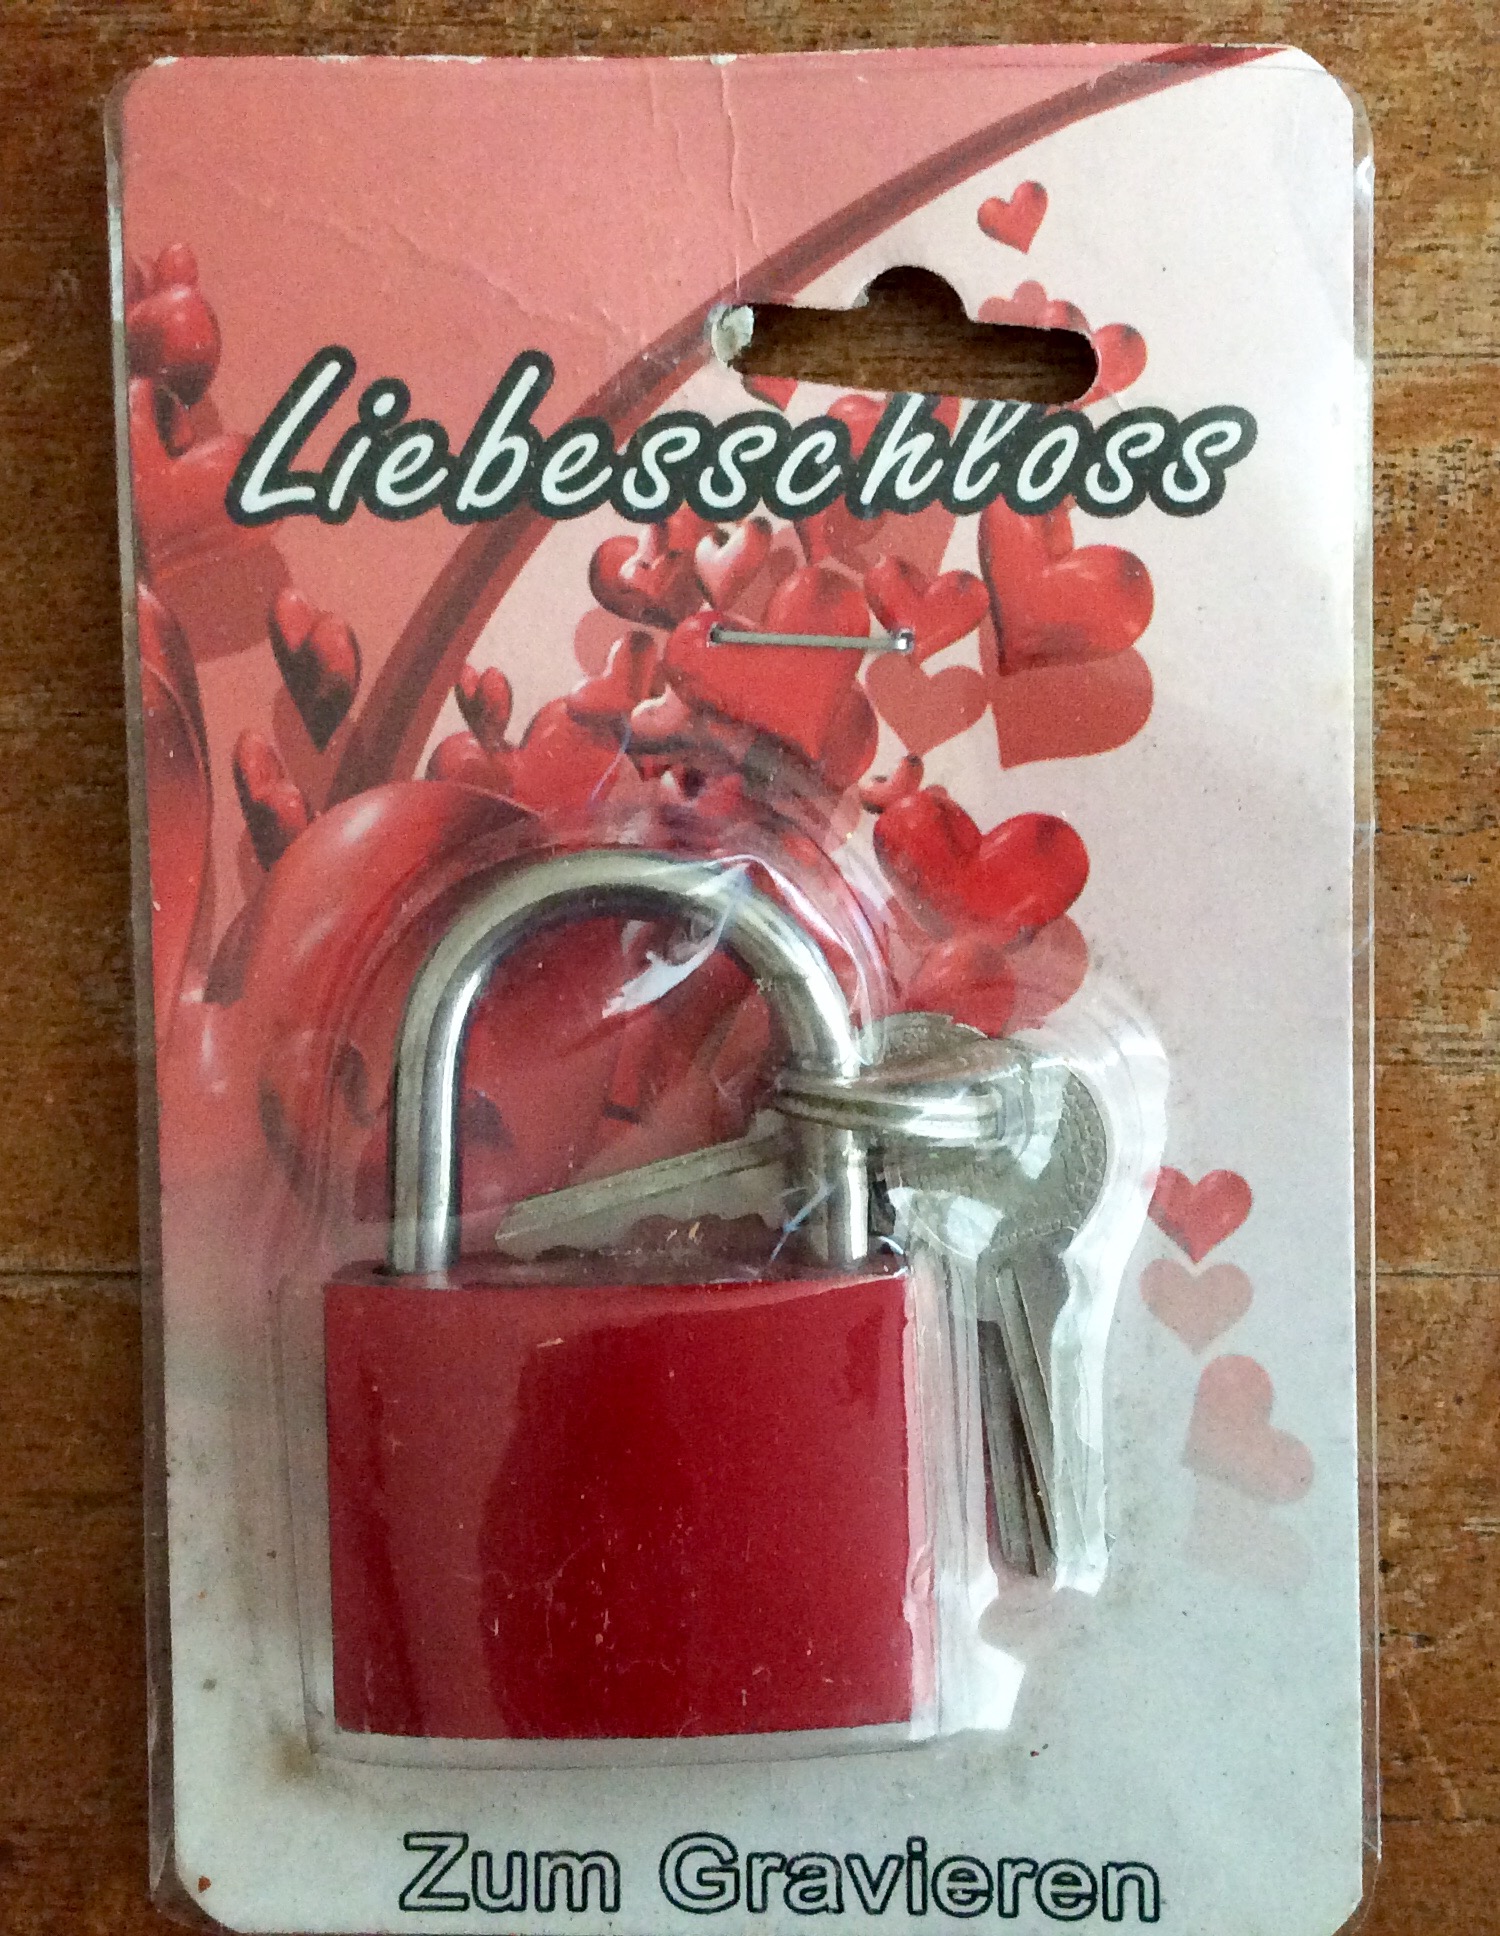 Love lock